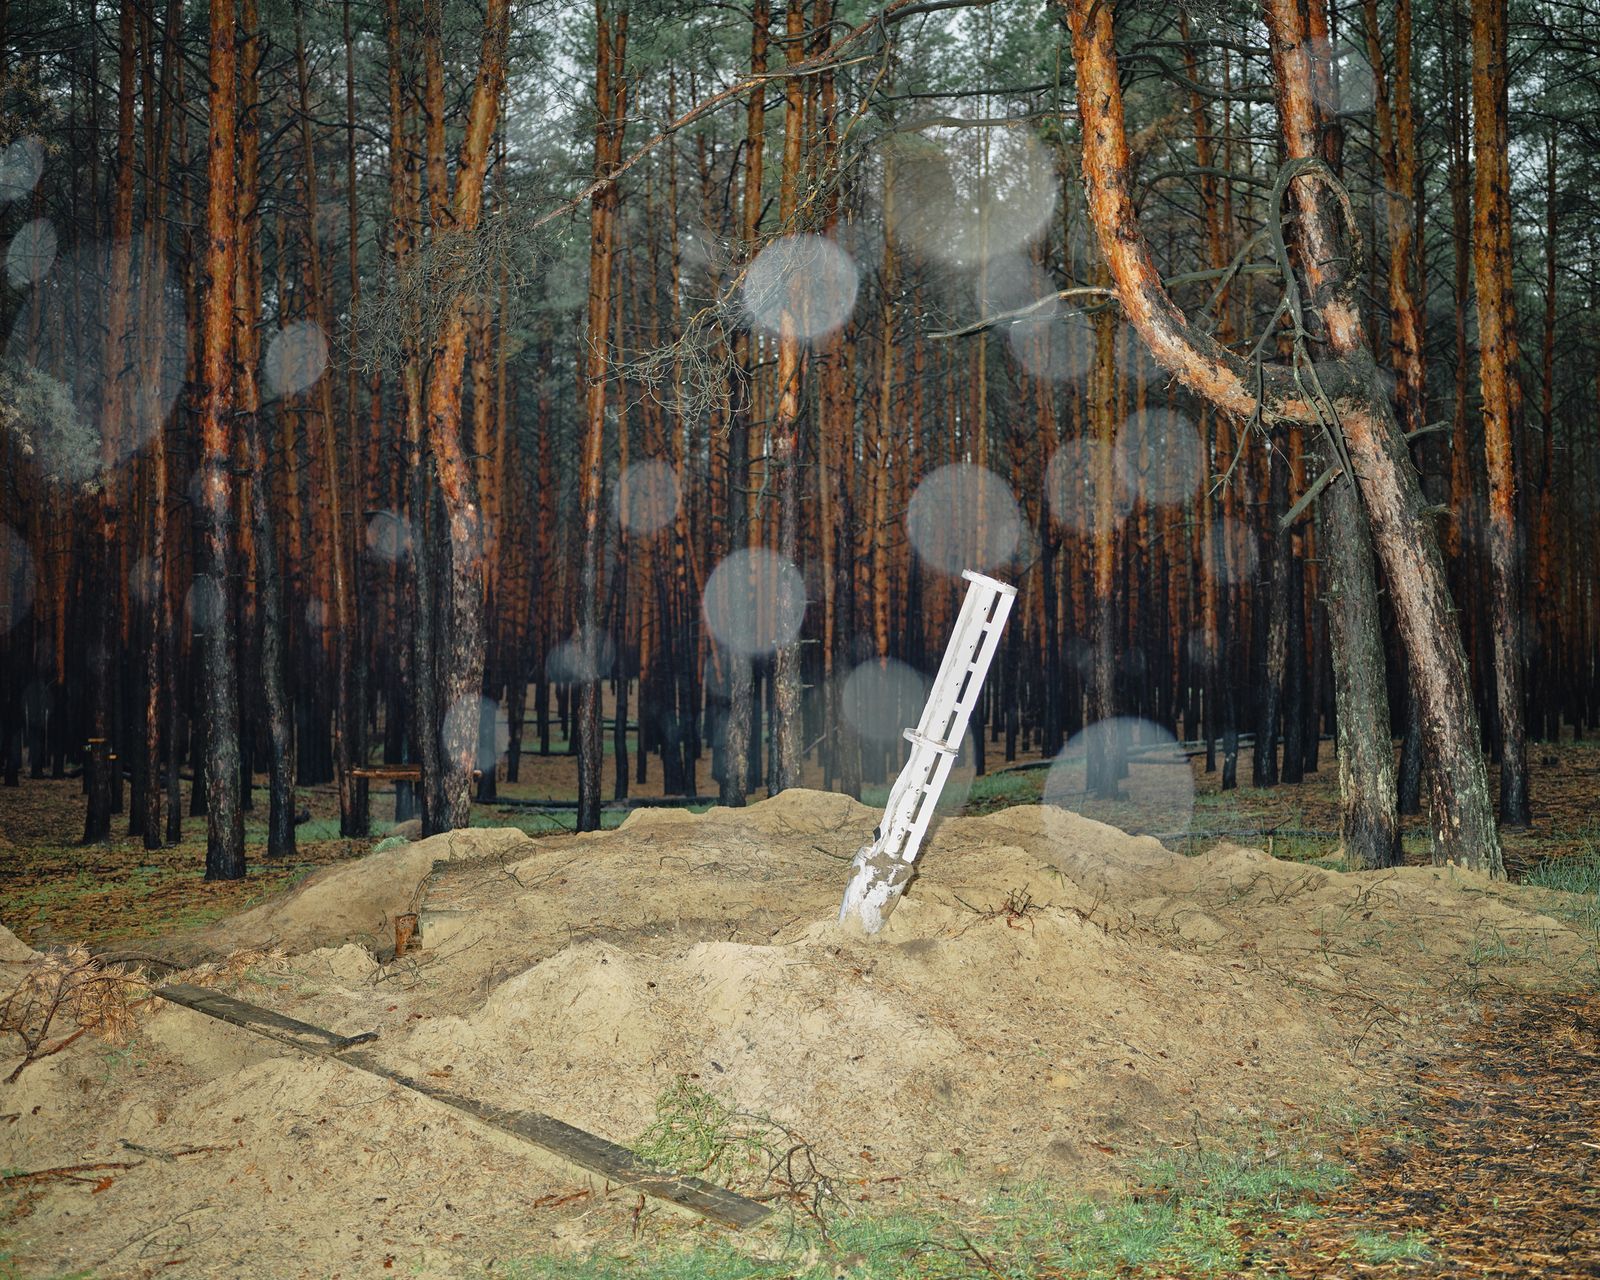 © Marcin Kruk - Izium, 11/10/2022, Wreckage of a rocket in the Izium forest.